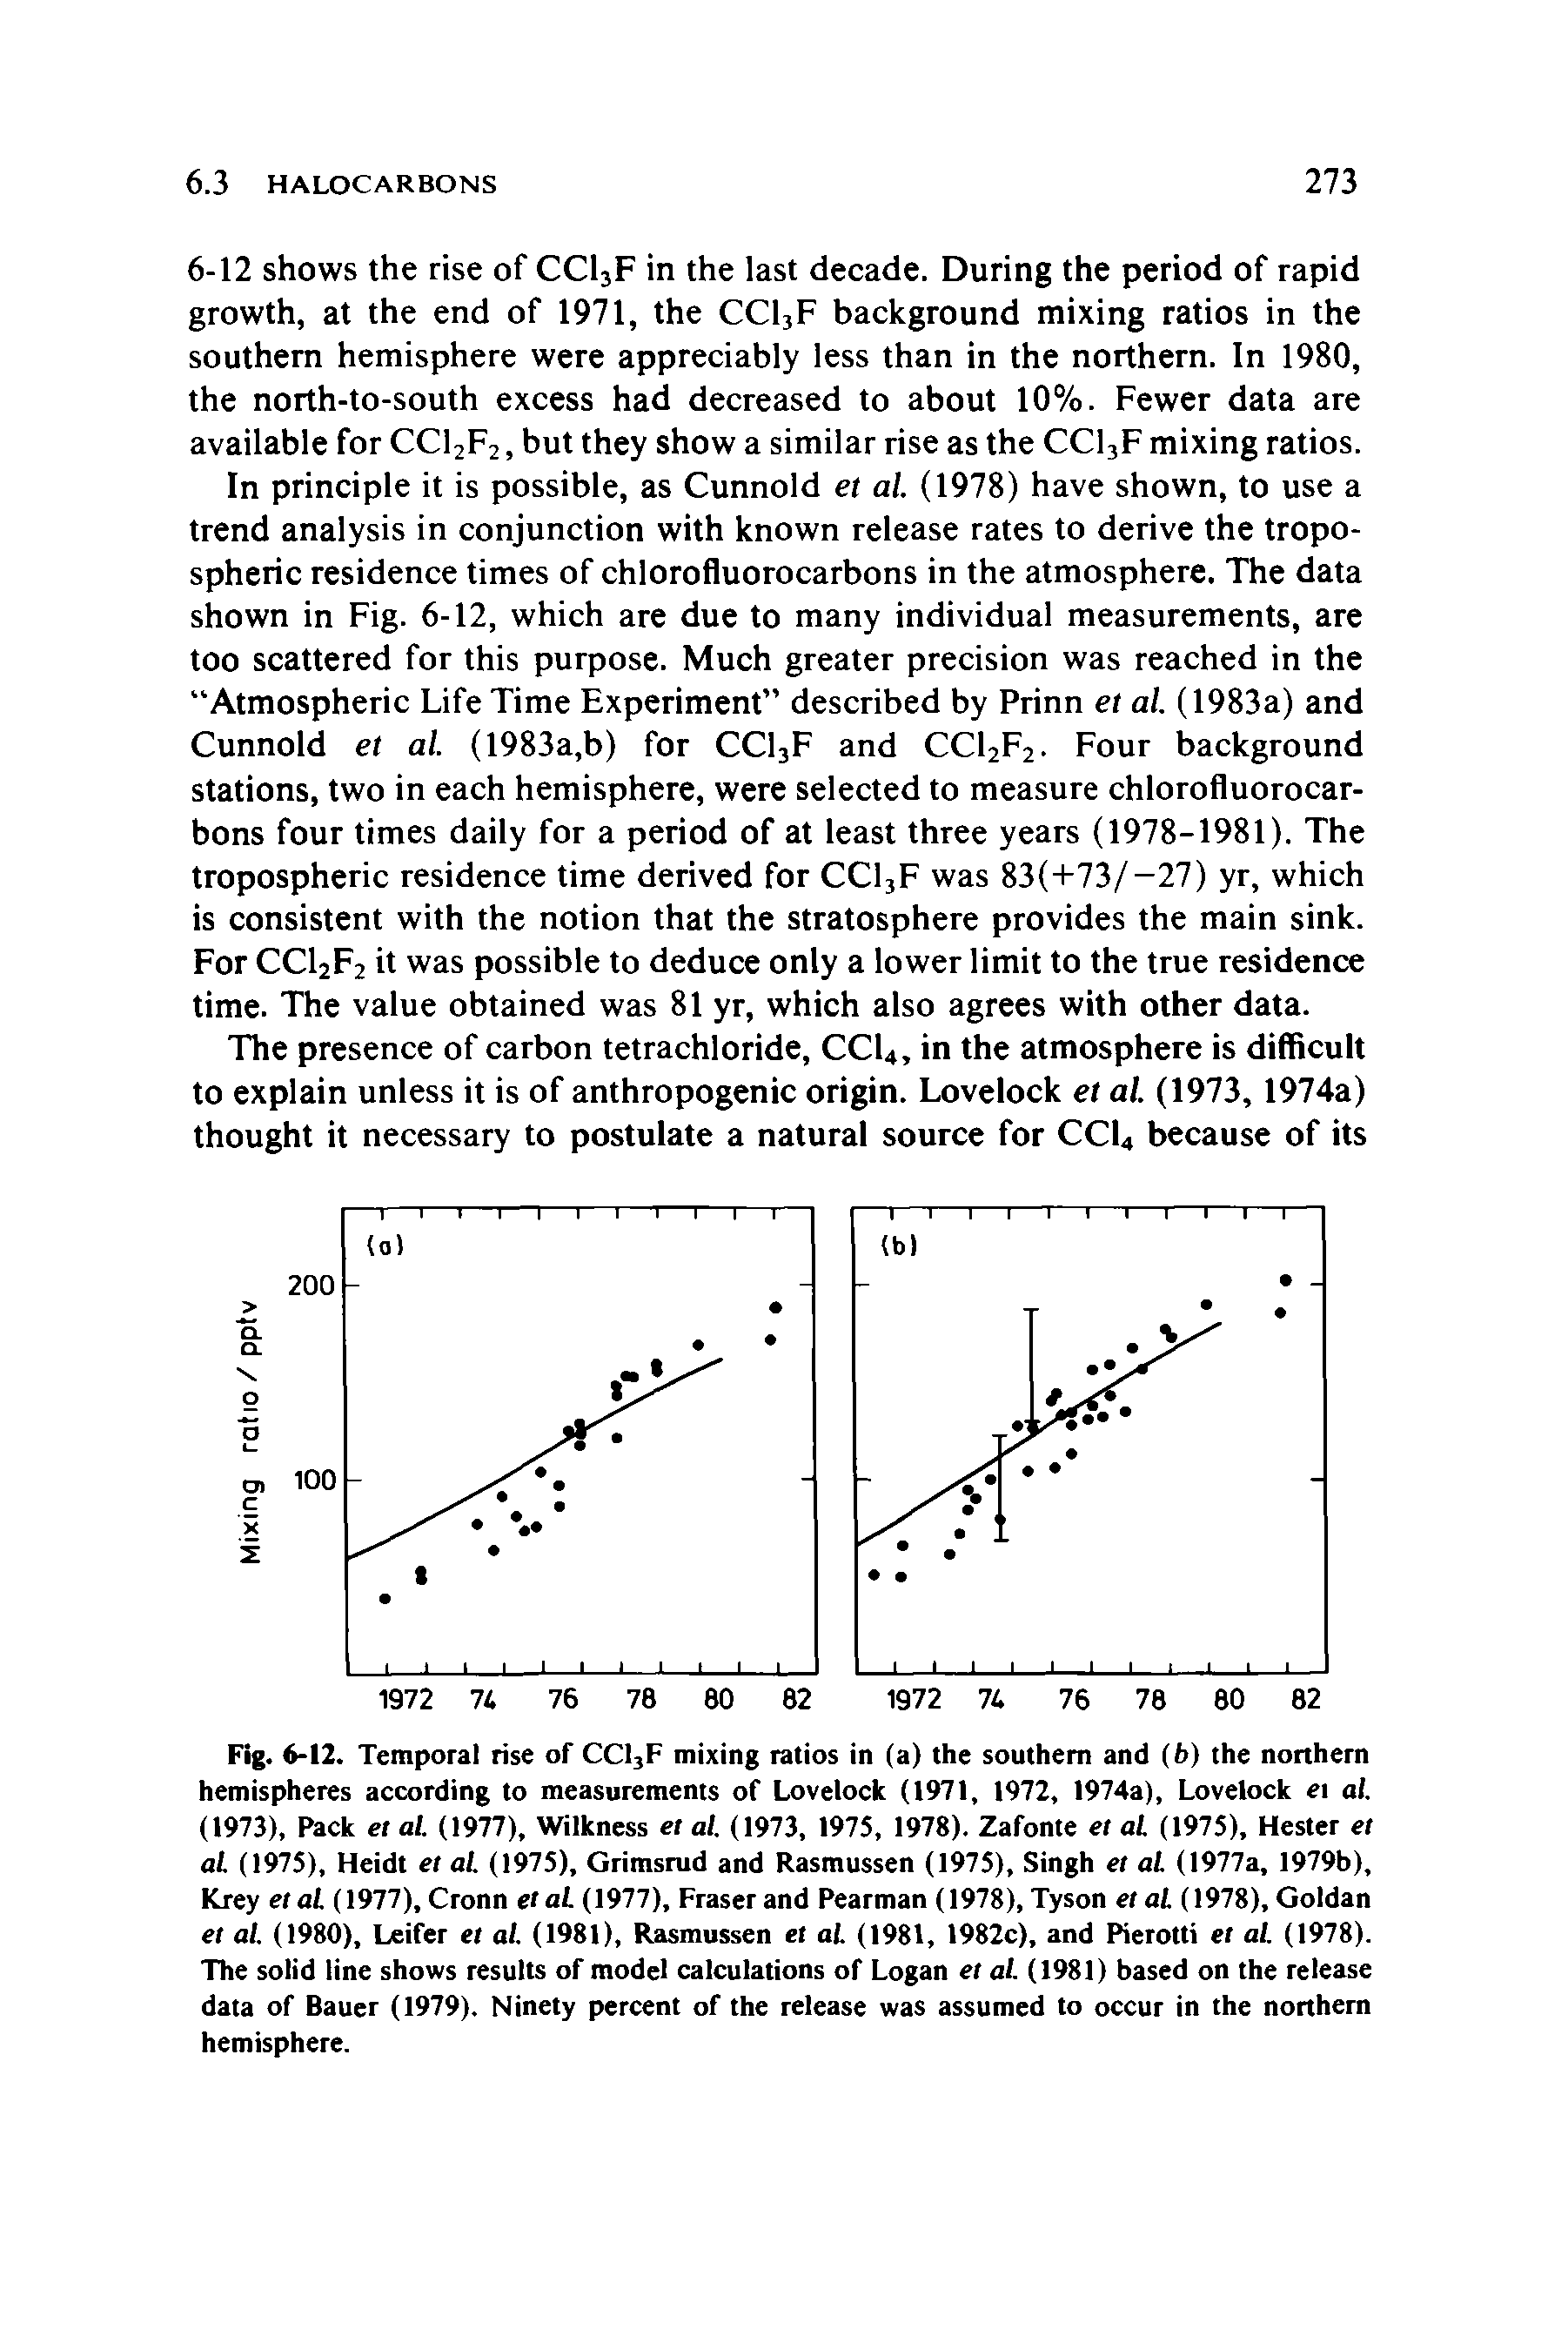 Fig. 6-12. Temporal rise of CC13F mixing ratios in (a) the southern and (b) the northern hemispheres according to measurements of Lovelock (1971, 1972, 1974a), Lovelock et al. (1973), Pack et al. (1977), Wilkness et al. (1973, 1975, 1978). Zafonte et al (1975), Hester et al (1975), Heidt et al (1975), Grimsrud and Rasmussen (1975), Singh et al (1977a, 1979b), Krey etal (1977), Cronn et al. (1977), Fraser and Pearman (1978), Tyson et al (1978), Goldan et al. (1980), Leifer et al. (1981), Rasmussen et al (1981, 1982c), and Pierotti et al. (1978). The solid line shows results of model calculations of Logan et al. (1981) based on the release data of Bauer (1979). Ninety percent of the release was assumed to occur in the northern hemisphere.